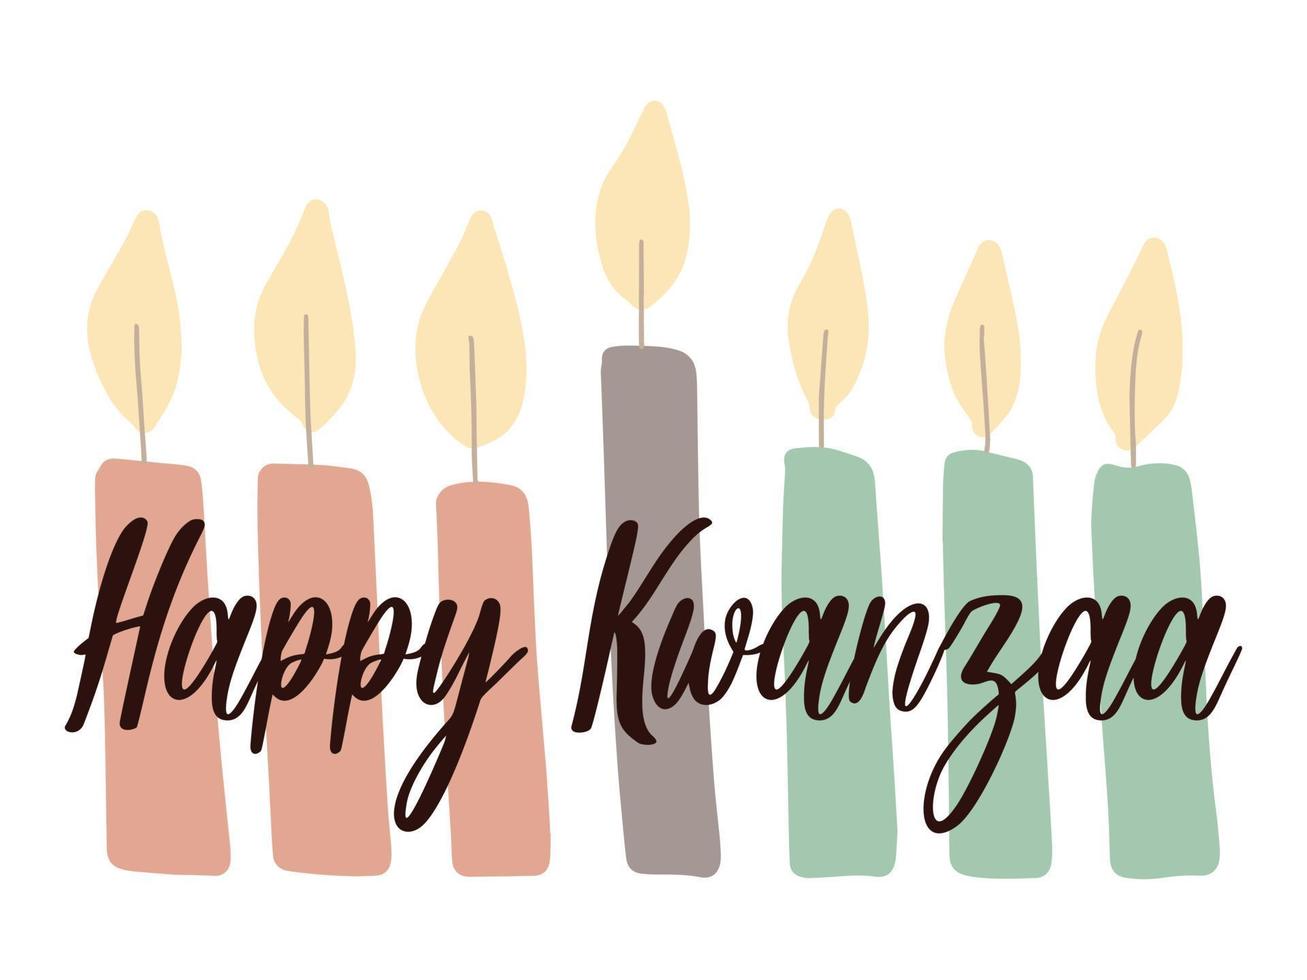 Cute Kwanzaa seamless pattern with seven kinara candles and dots